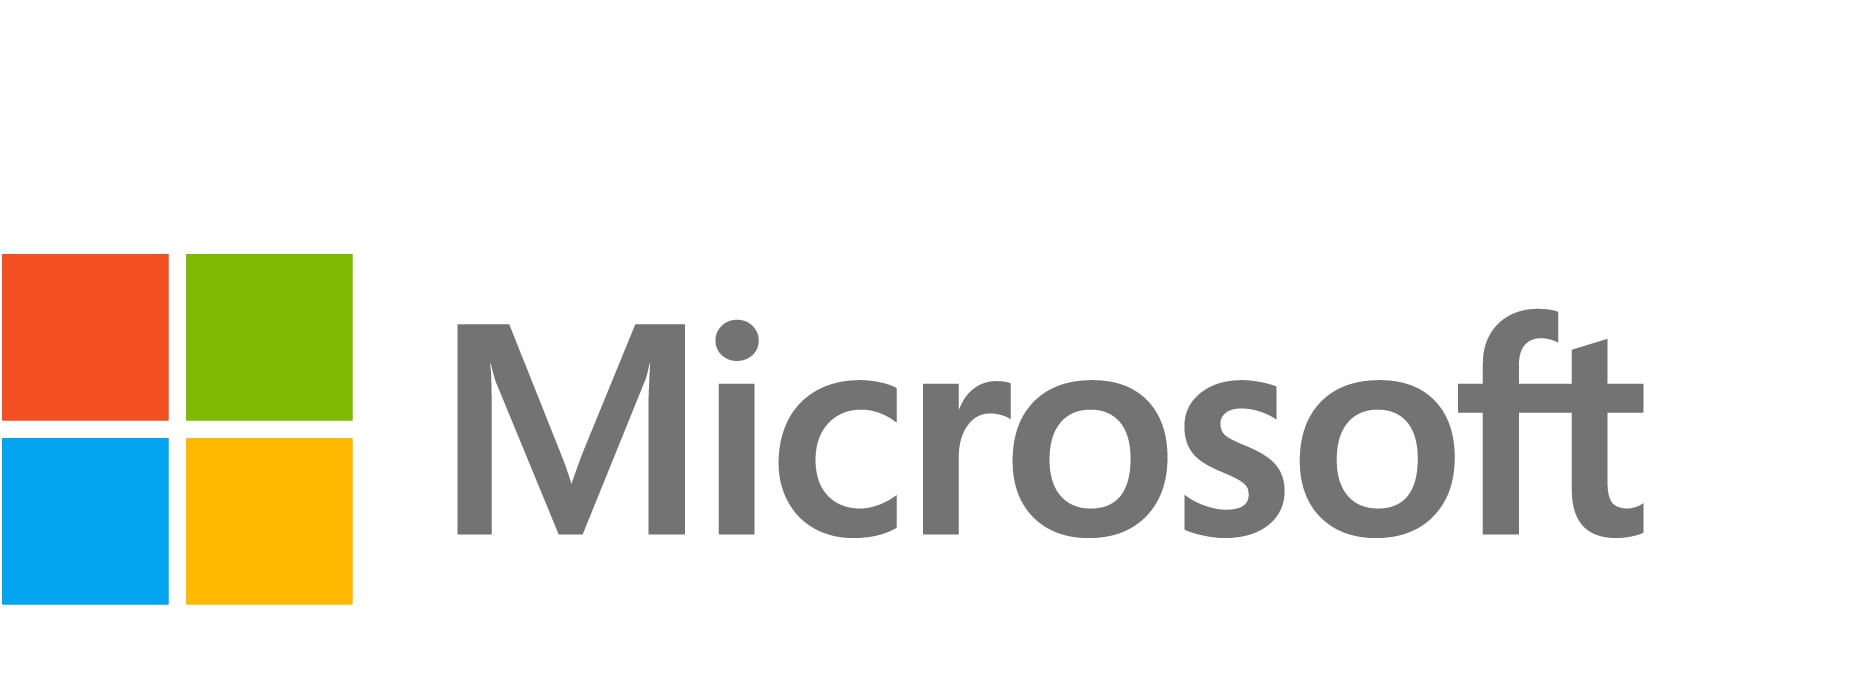 Microsoft Dynamics 365 for Sales - software assurance - 1 user CAL